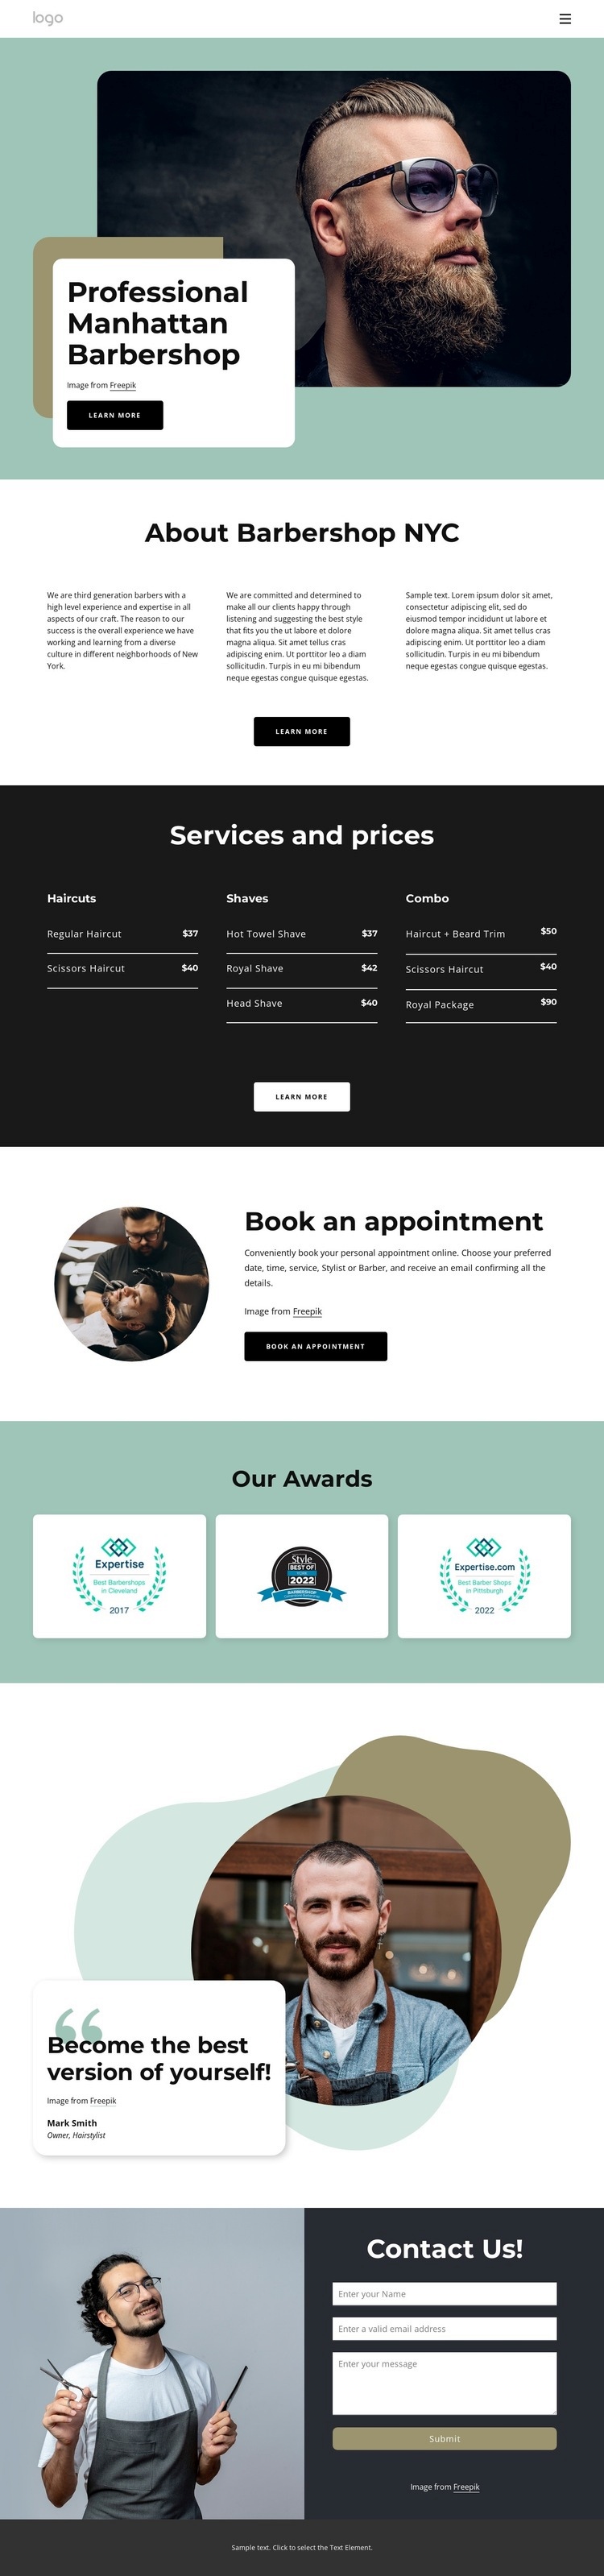 About Manhattan barbershop Web Page Design